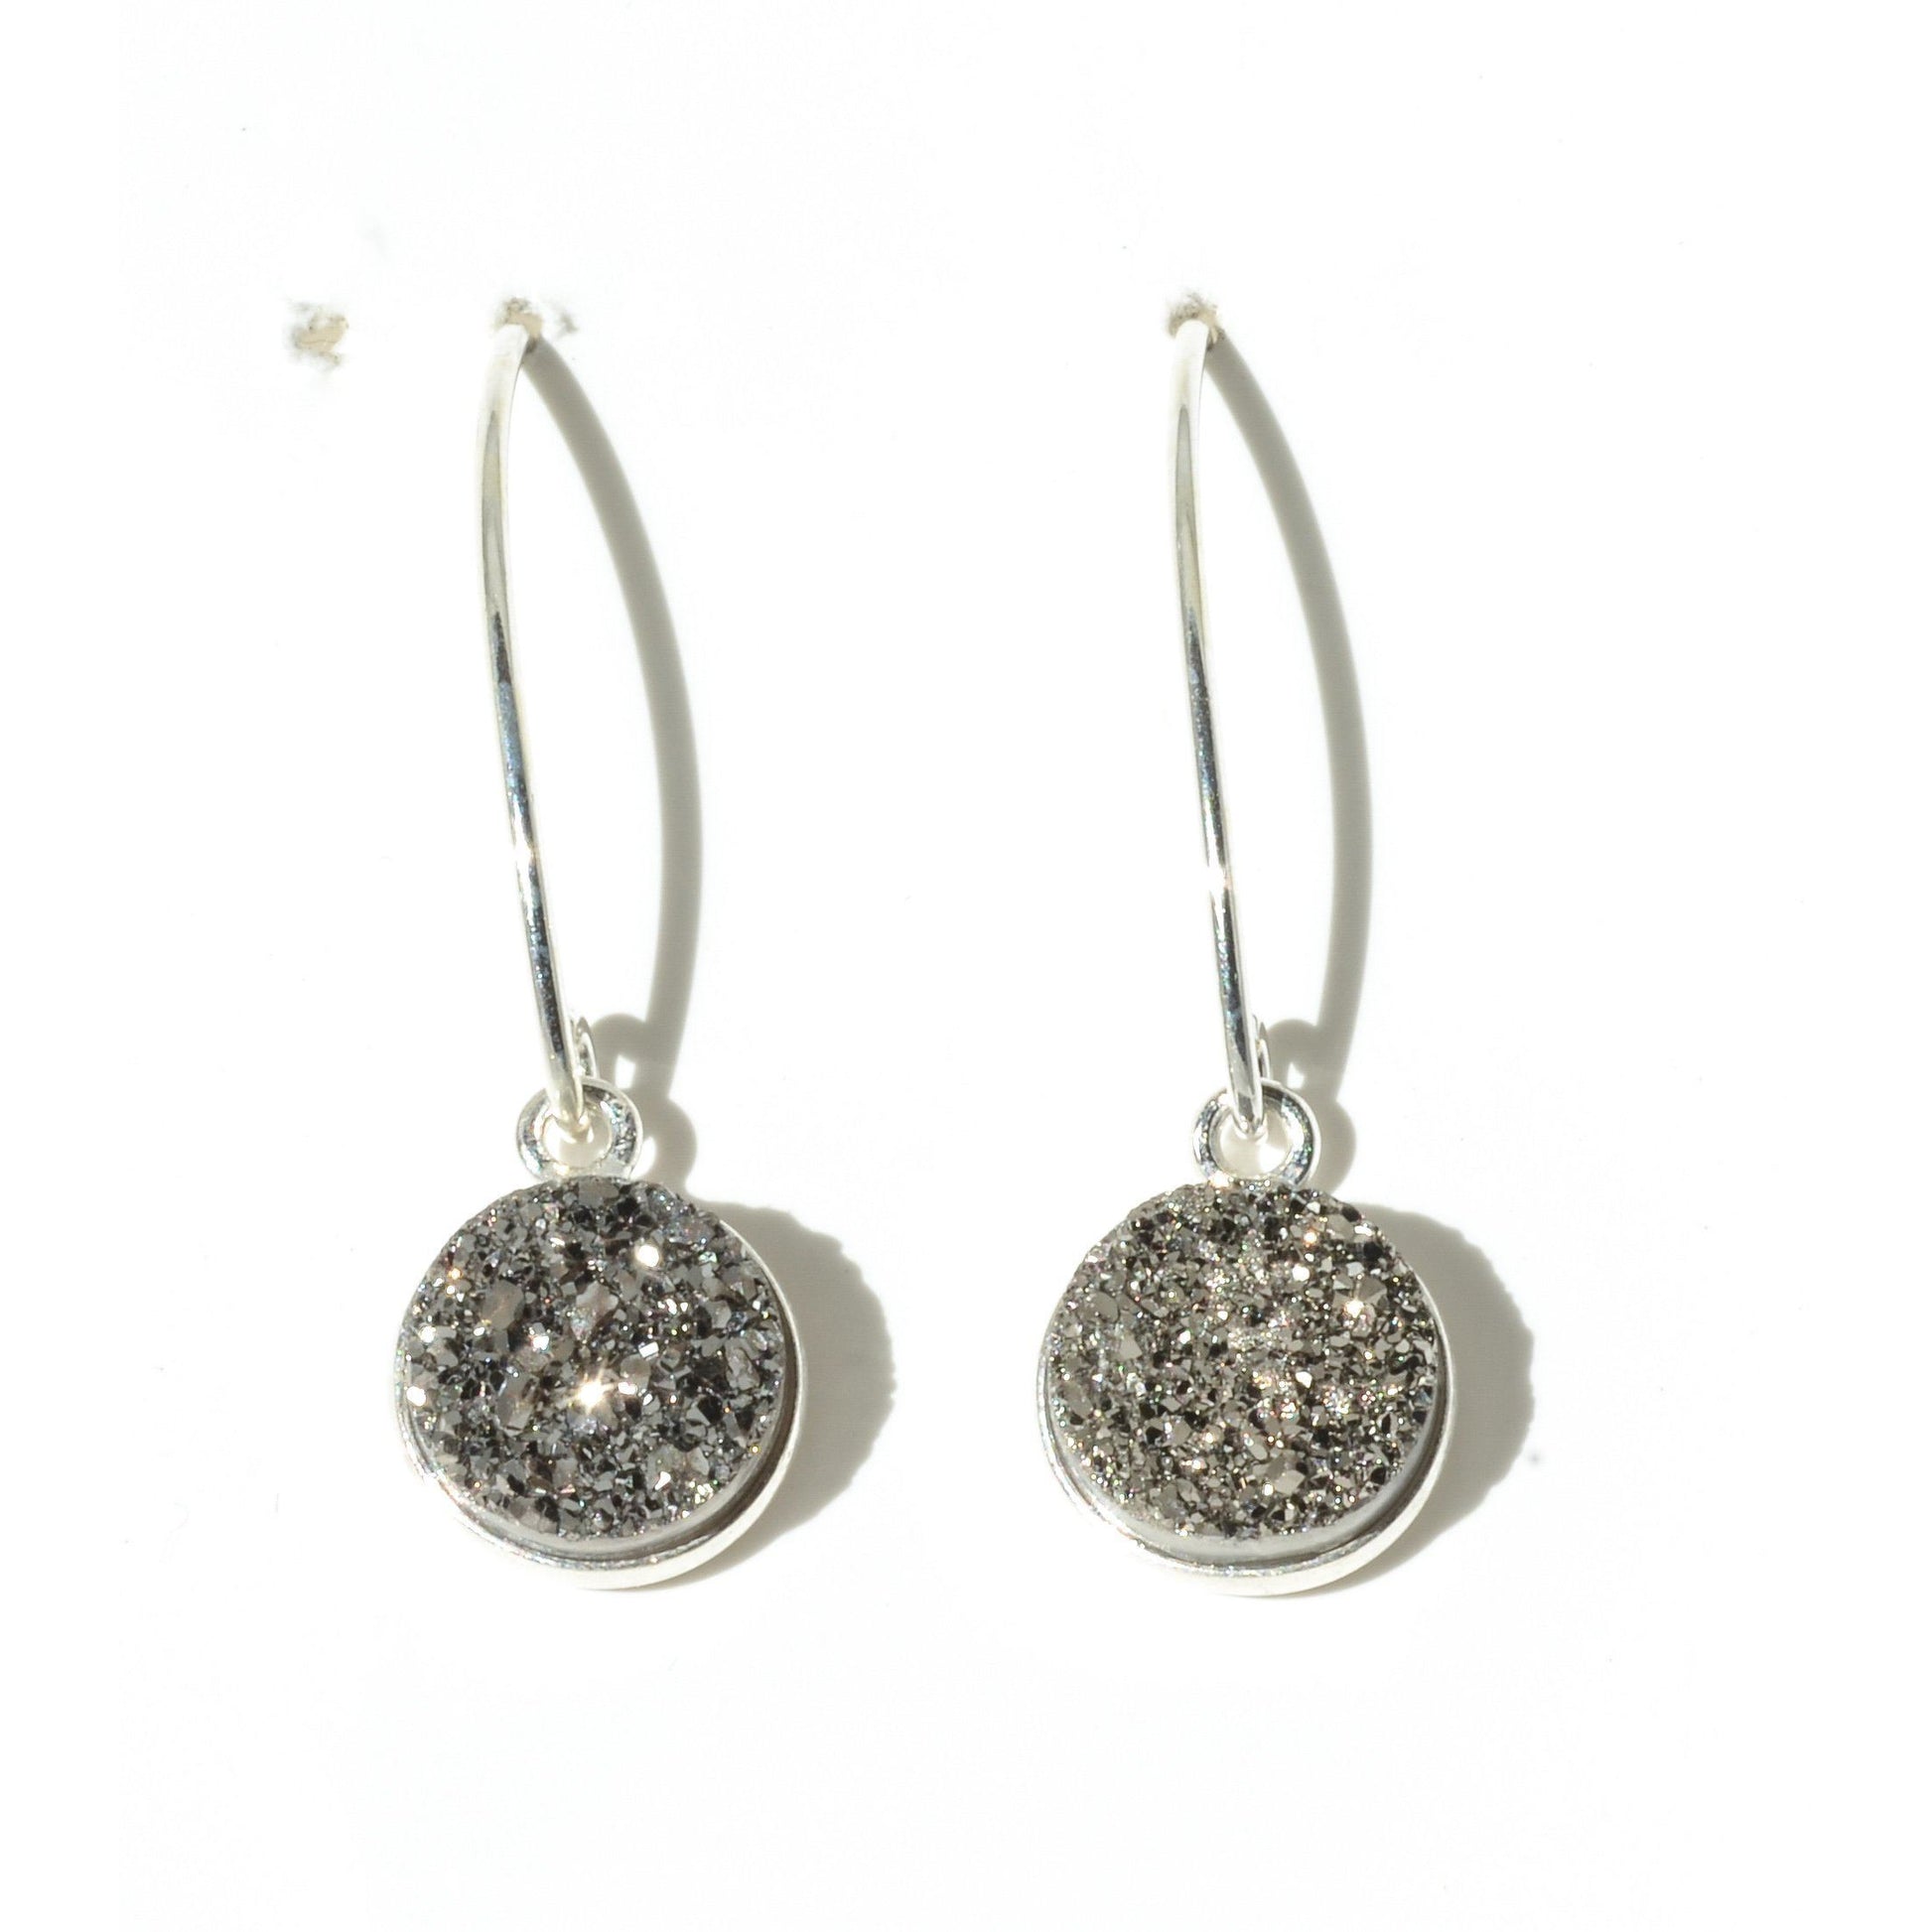 Sterling Silver Earrings With Druzy Quartz, 925 Bezel Set Jewelry - PCH Rings